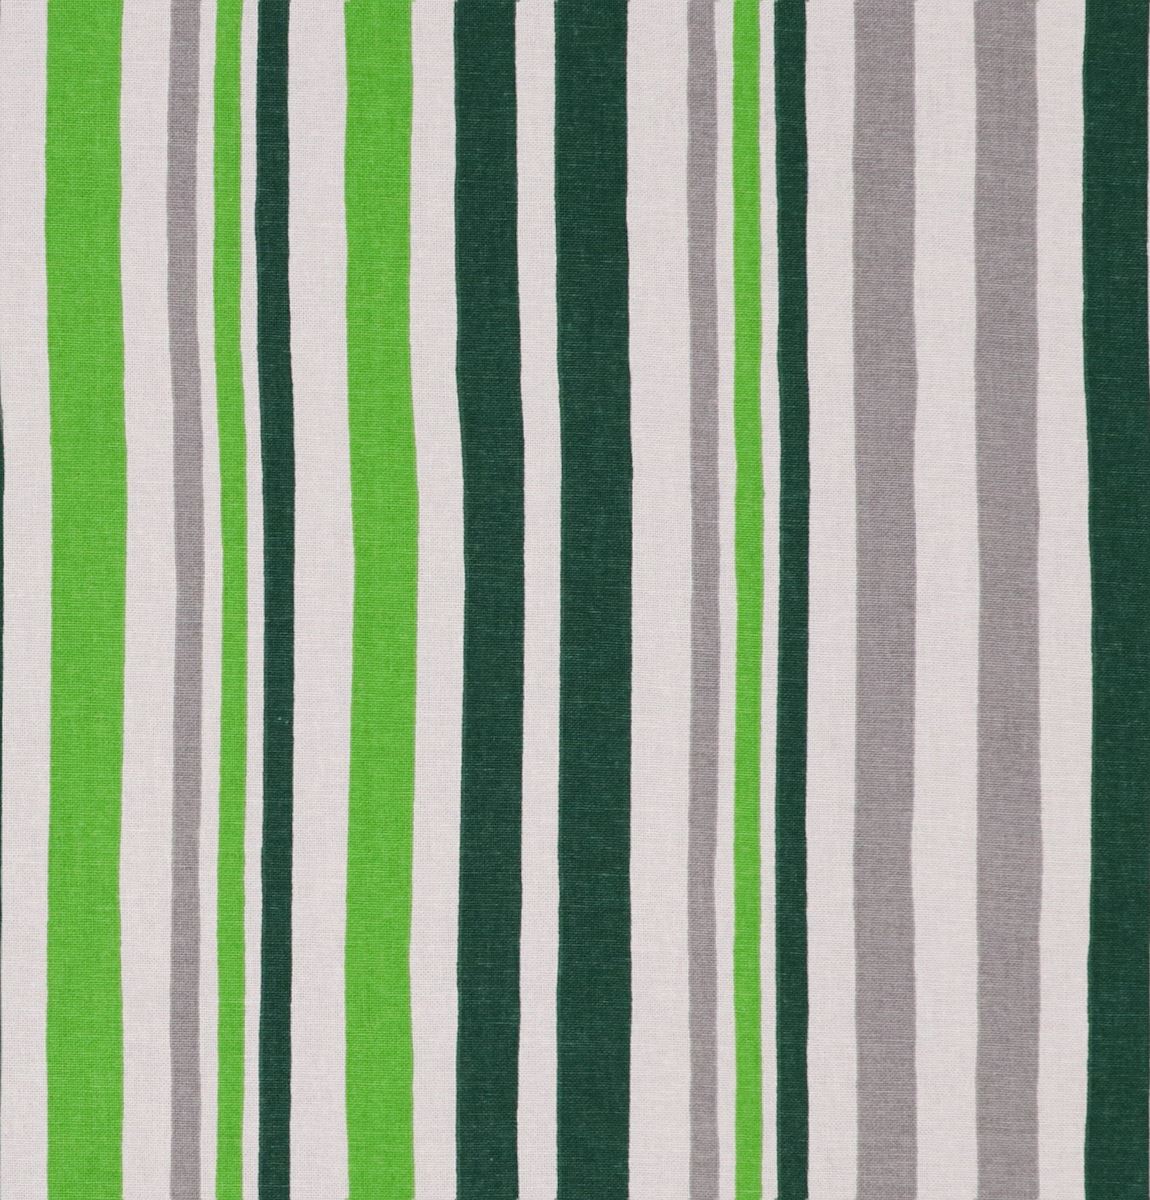 Night curtain green stripe